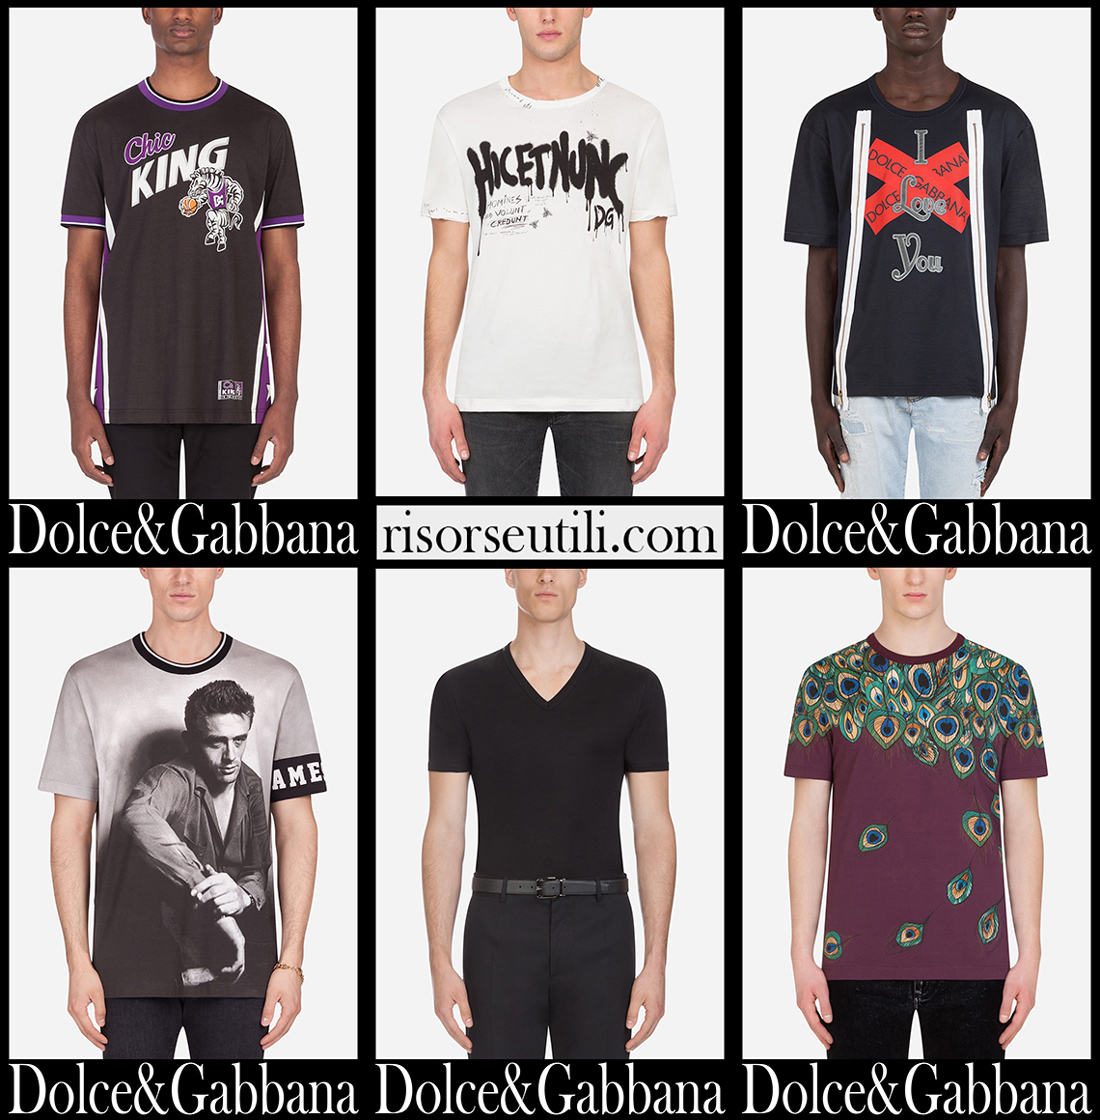 New arrivals Dolce Gabbana t shirts 2021 mens clothing